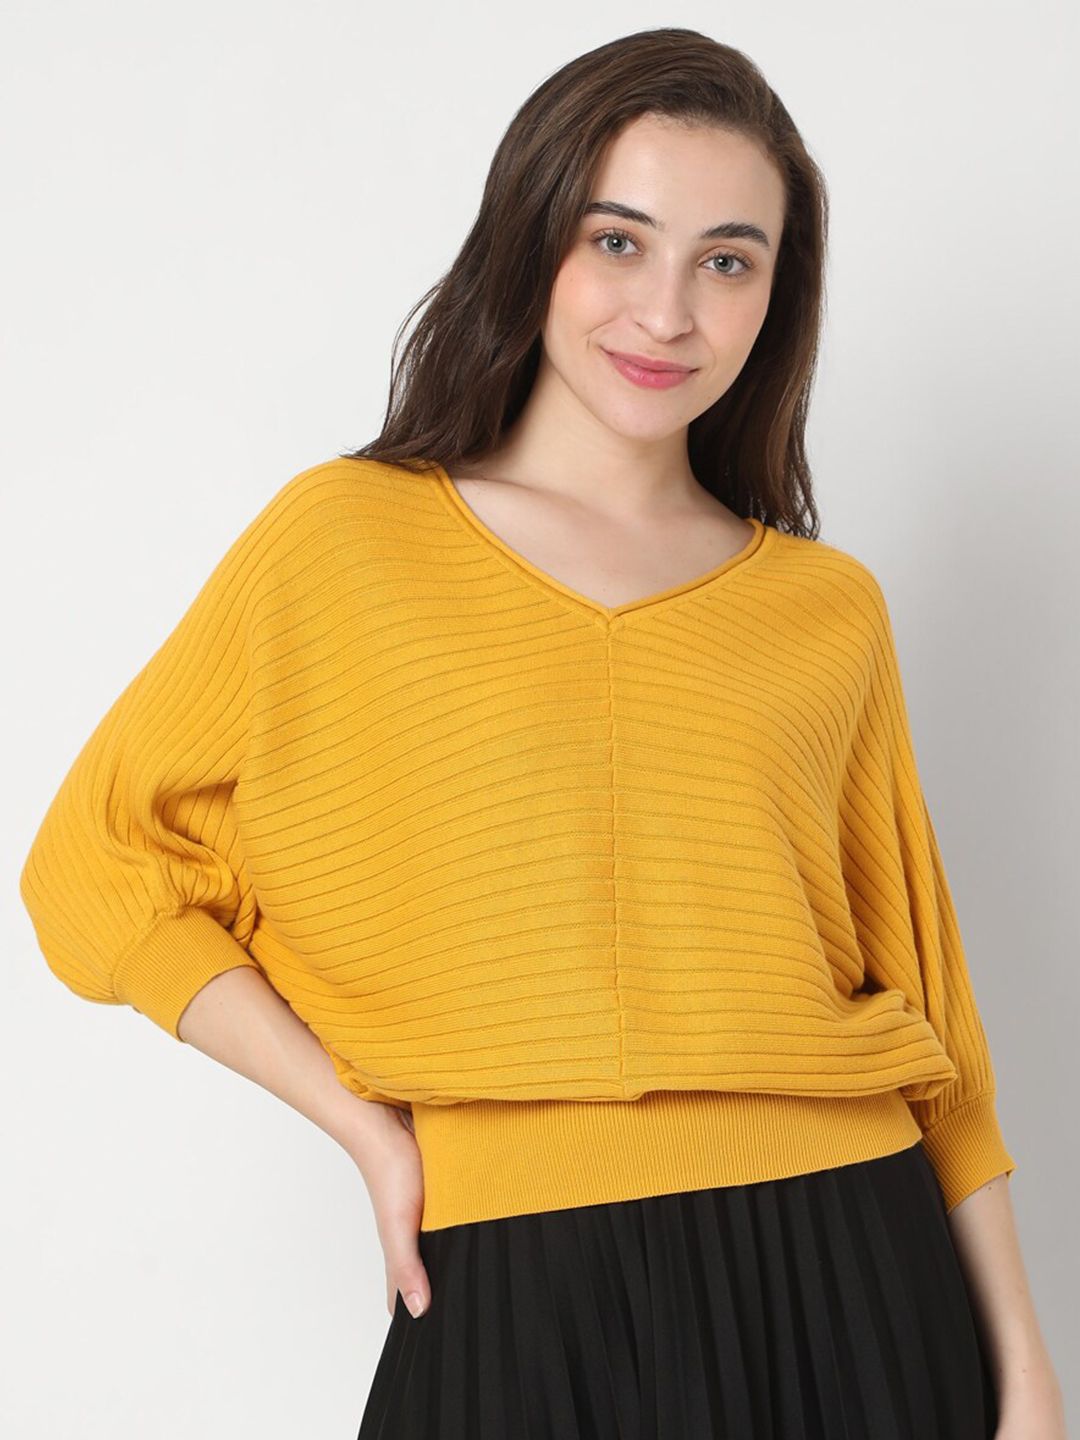 Vero Moda Women Yellow Printed Pullover Sweater Price in India